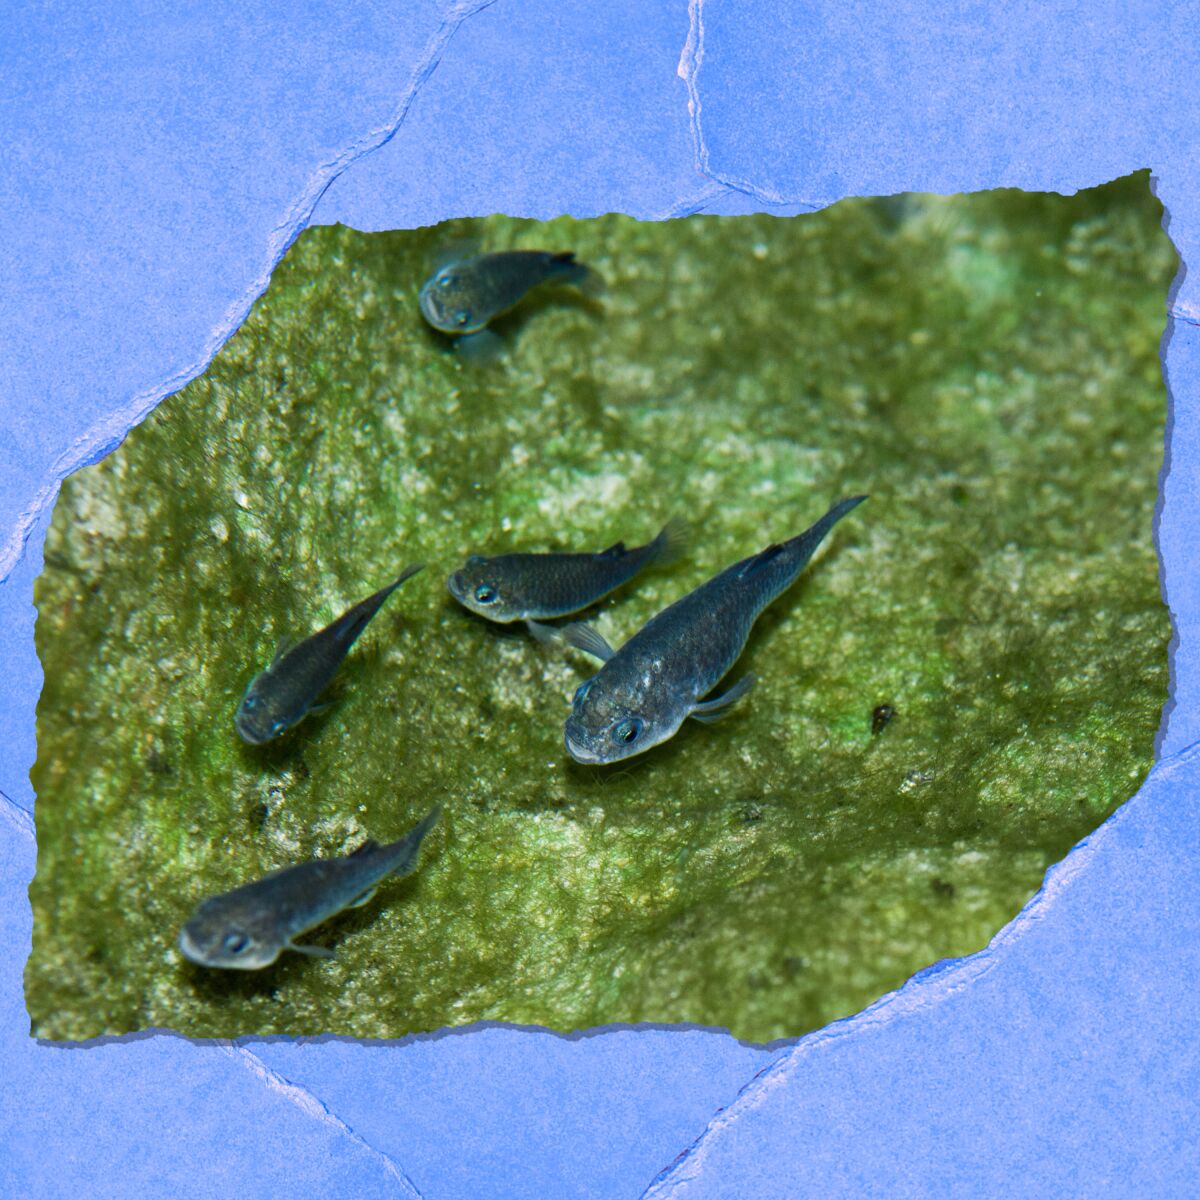 Small dark fish swim against an algae-covered backdrop.